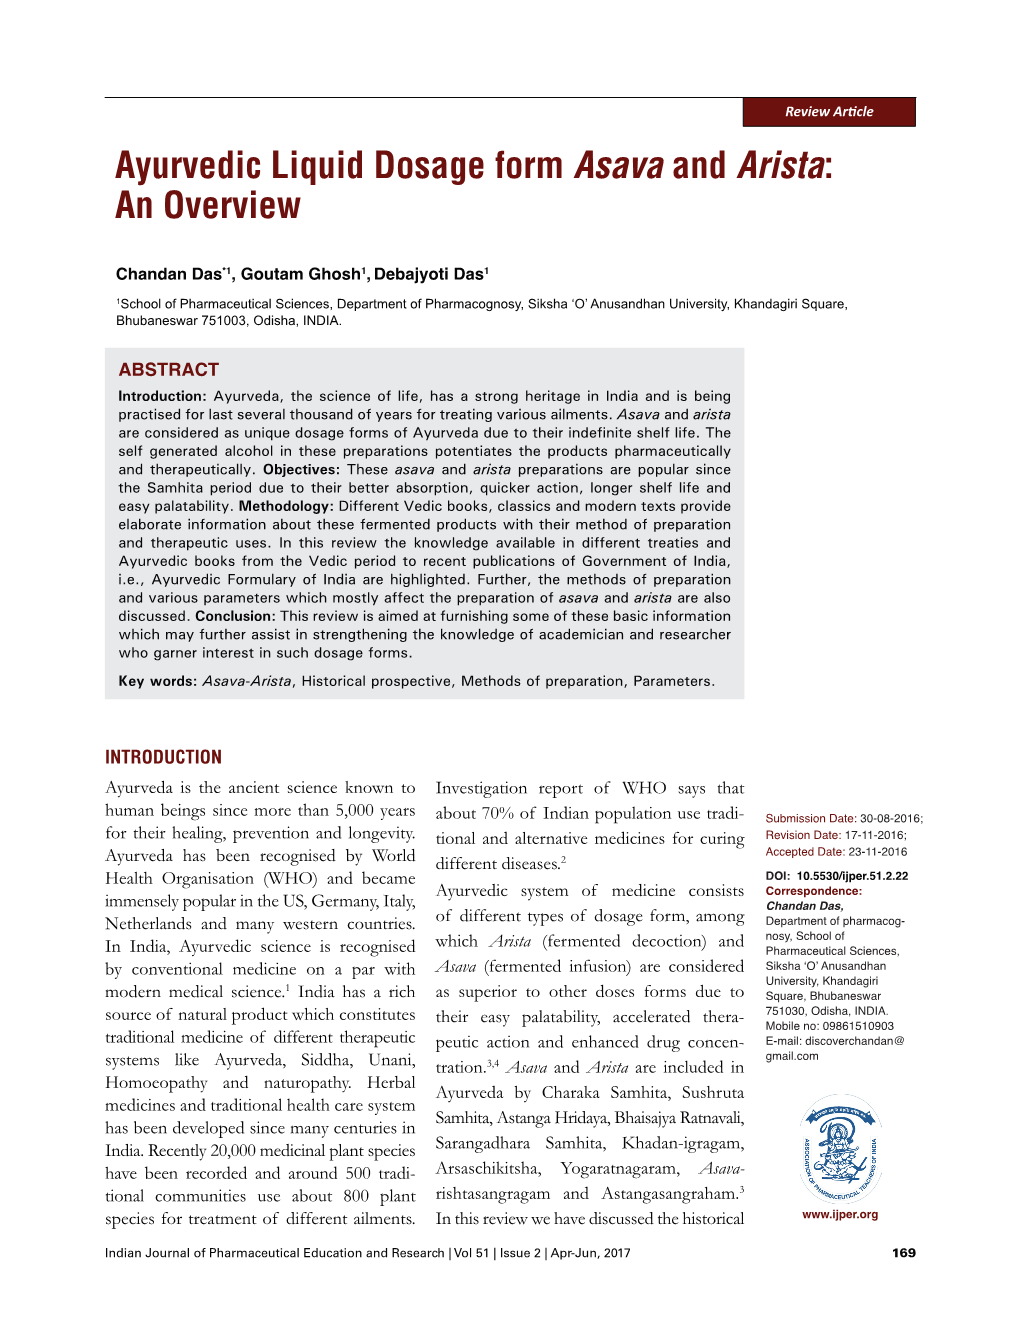 Ayurvedic Liquid Dosage Form Asava and Arista: an Overview